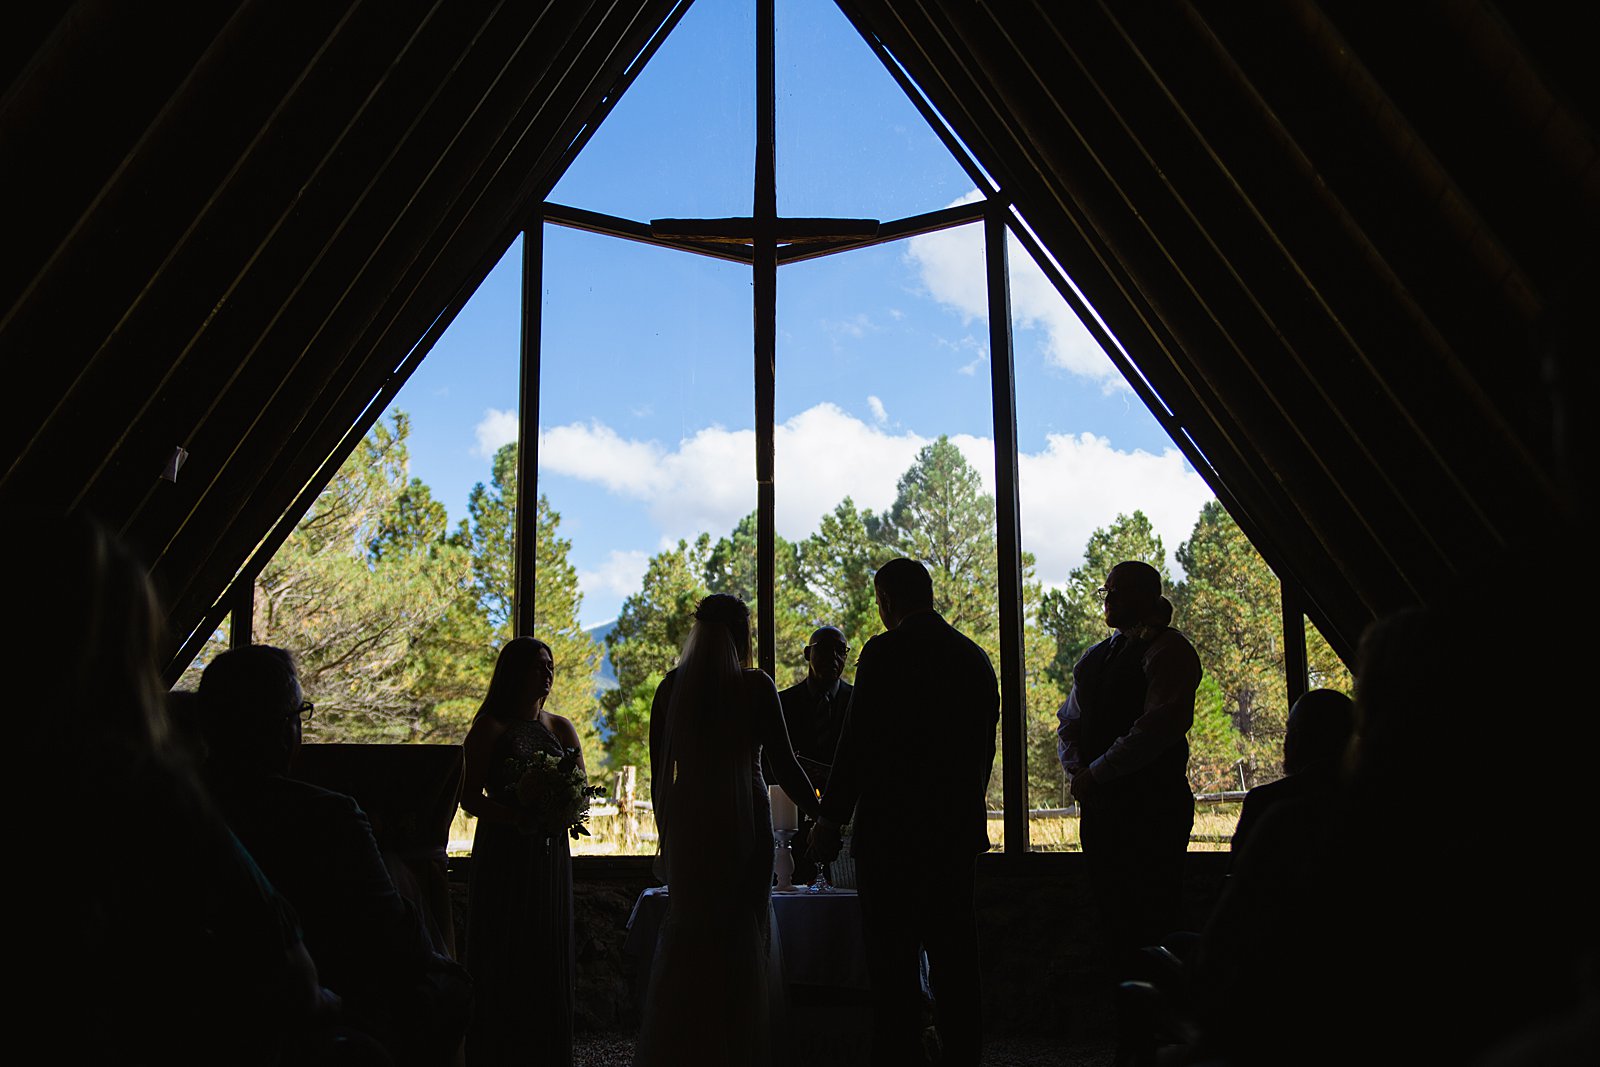 Wedding ceremony at Chapel of the Holy Dove by Arizona wedding photographer PMA Photography.